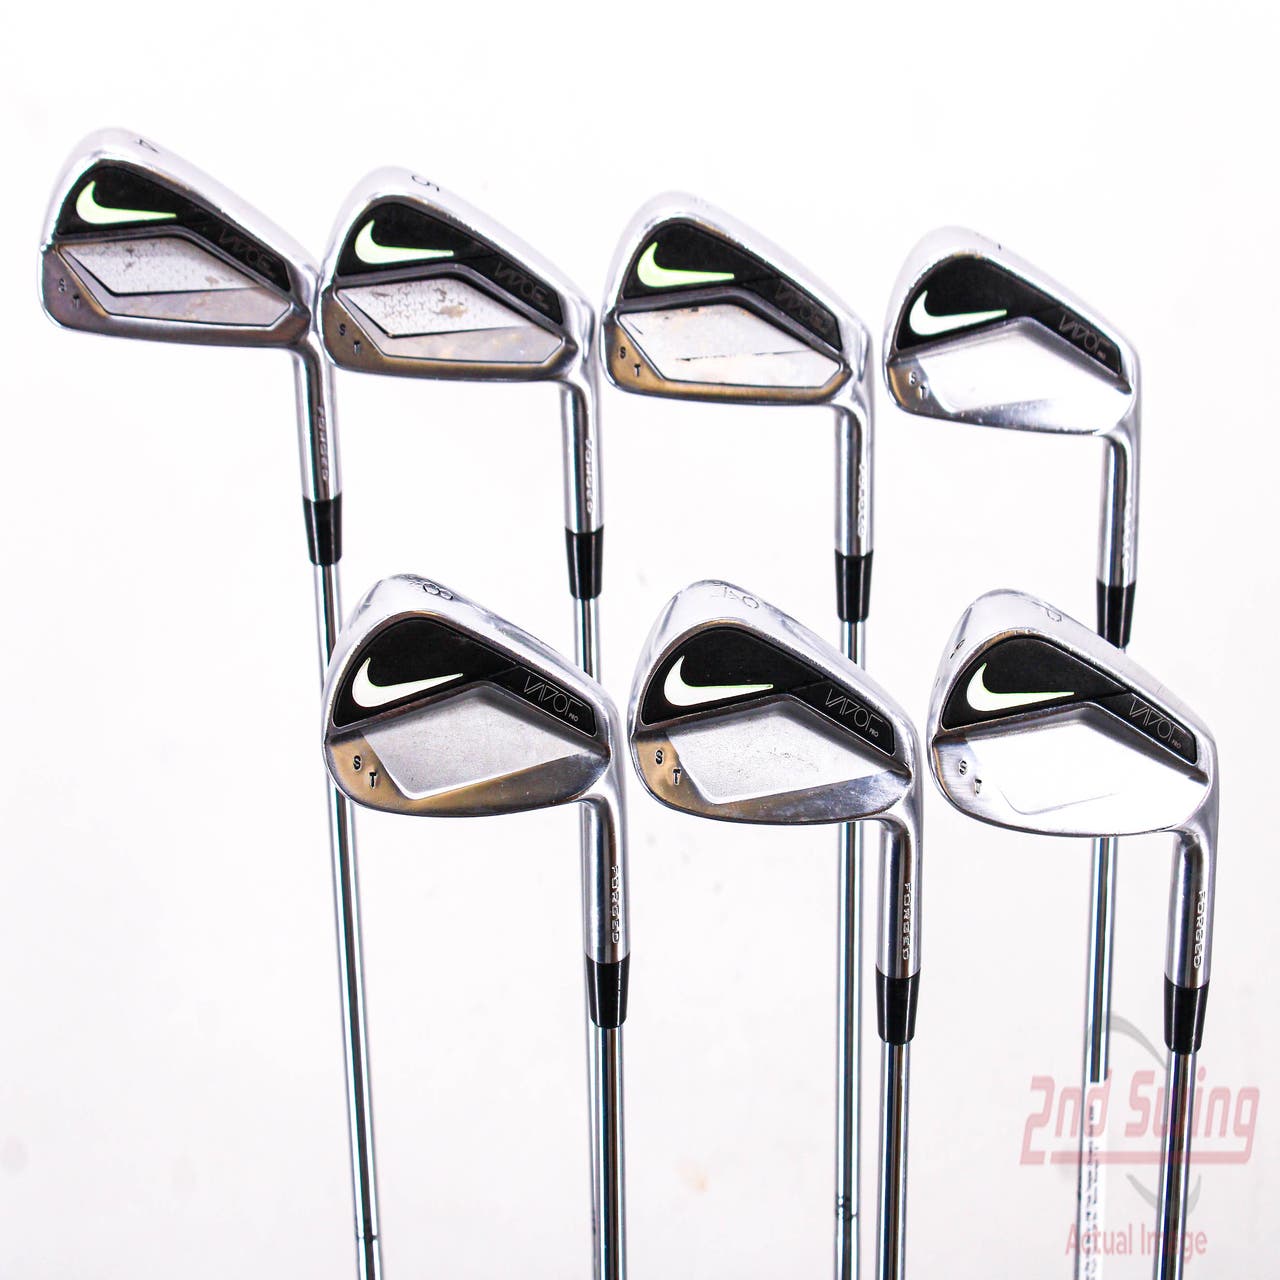 Nike Vapor Pro Iron Set | Swing Golf